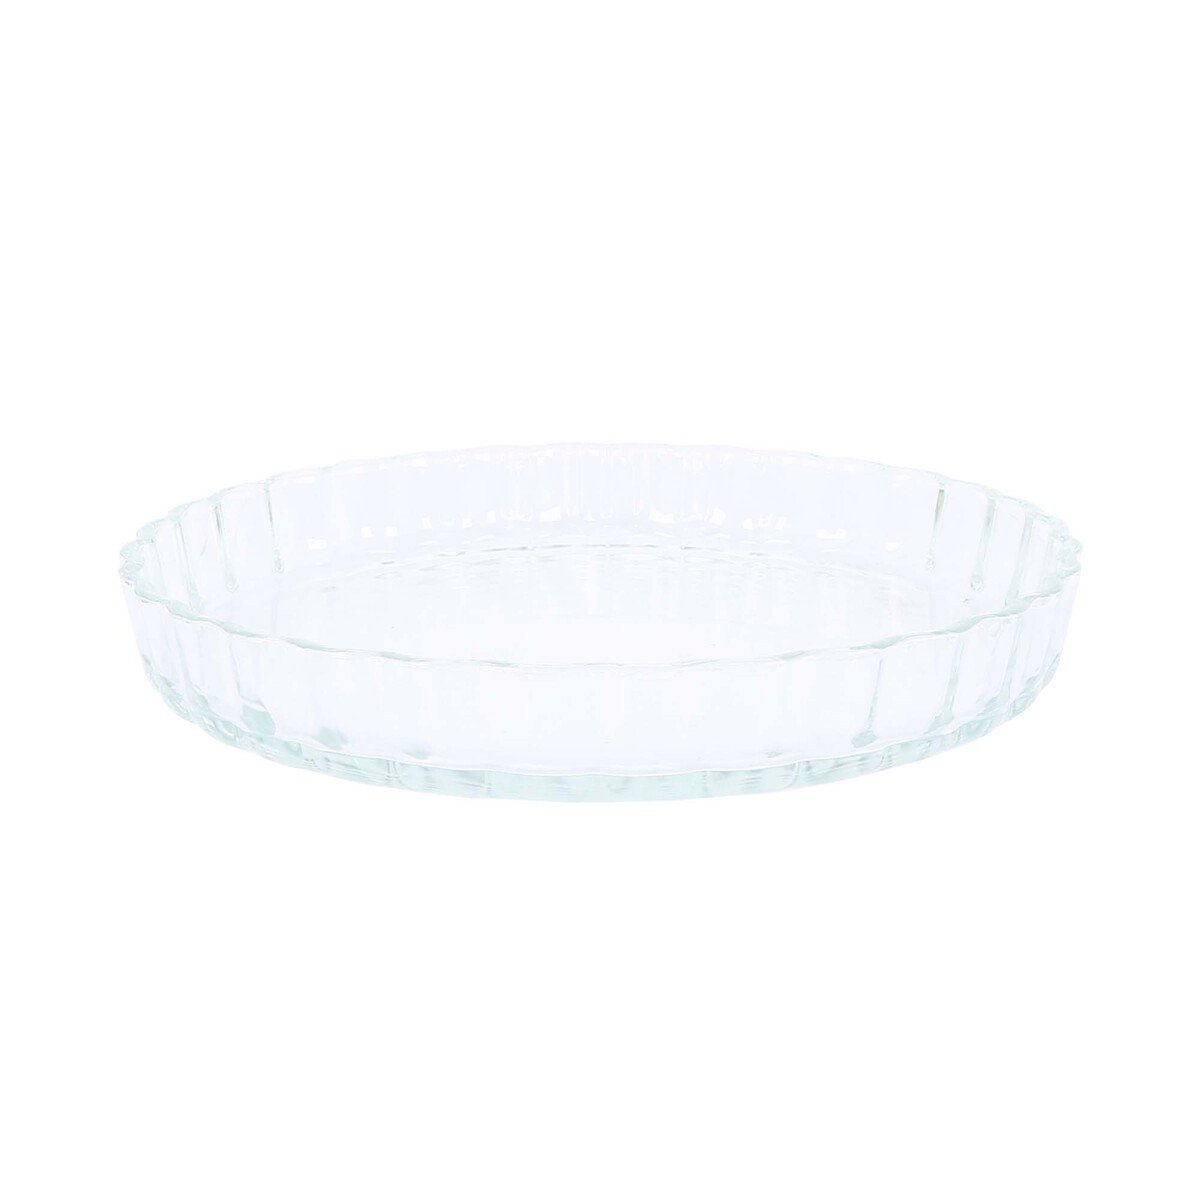 Chefline HSAW20 Borosilicate Glass Round Baking Dish, 2.0 Litre, Transparent